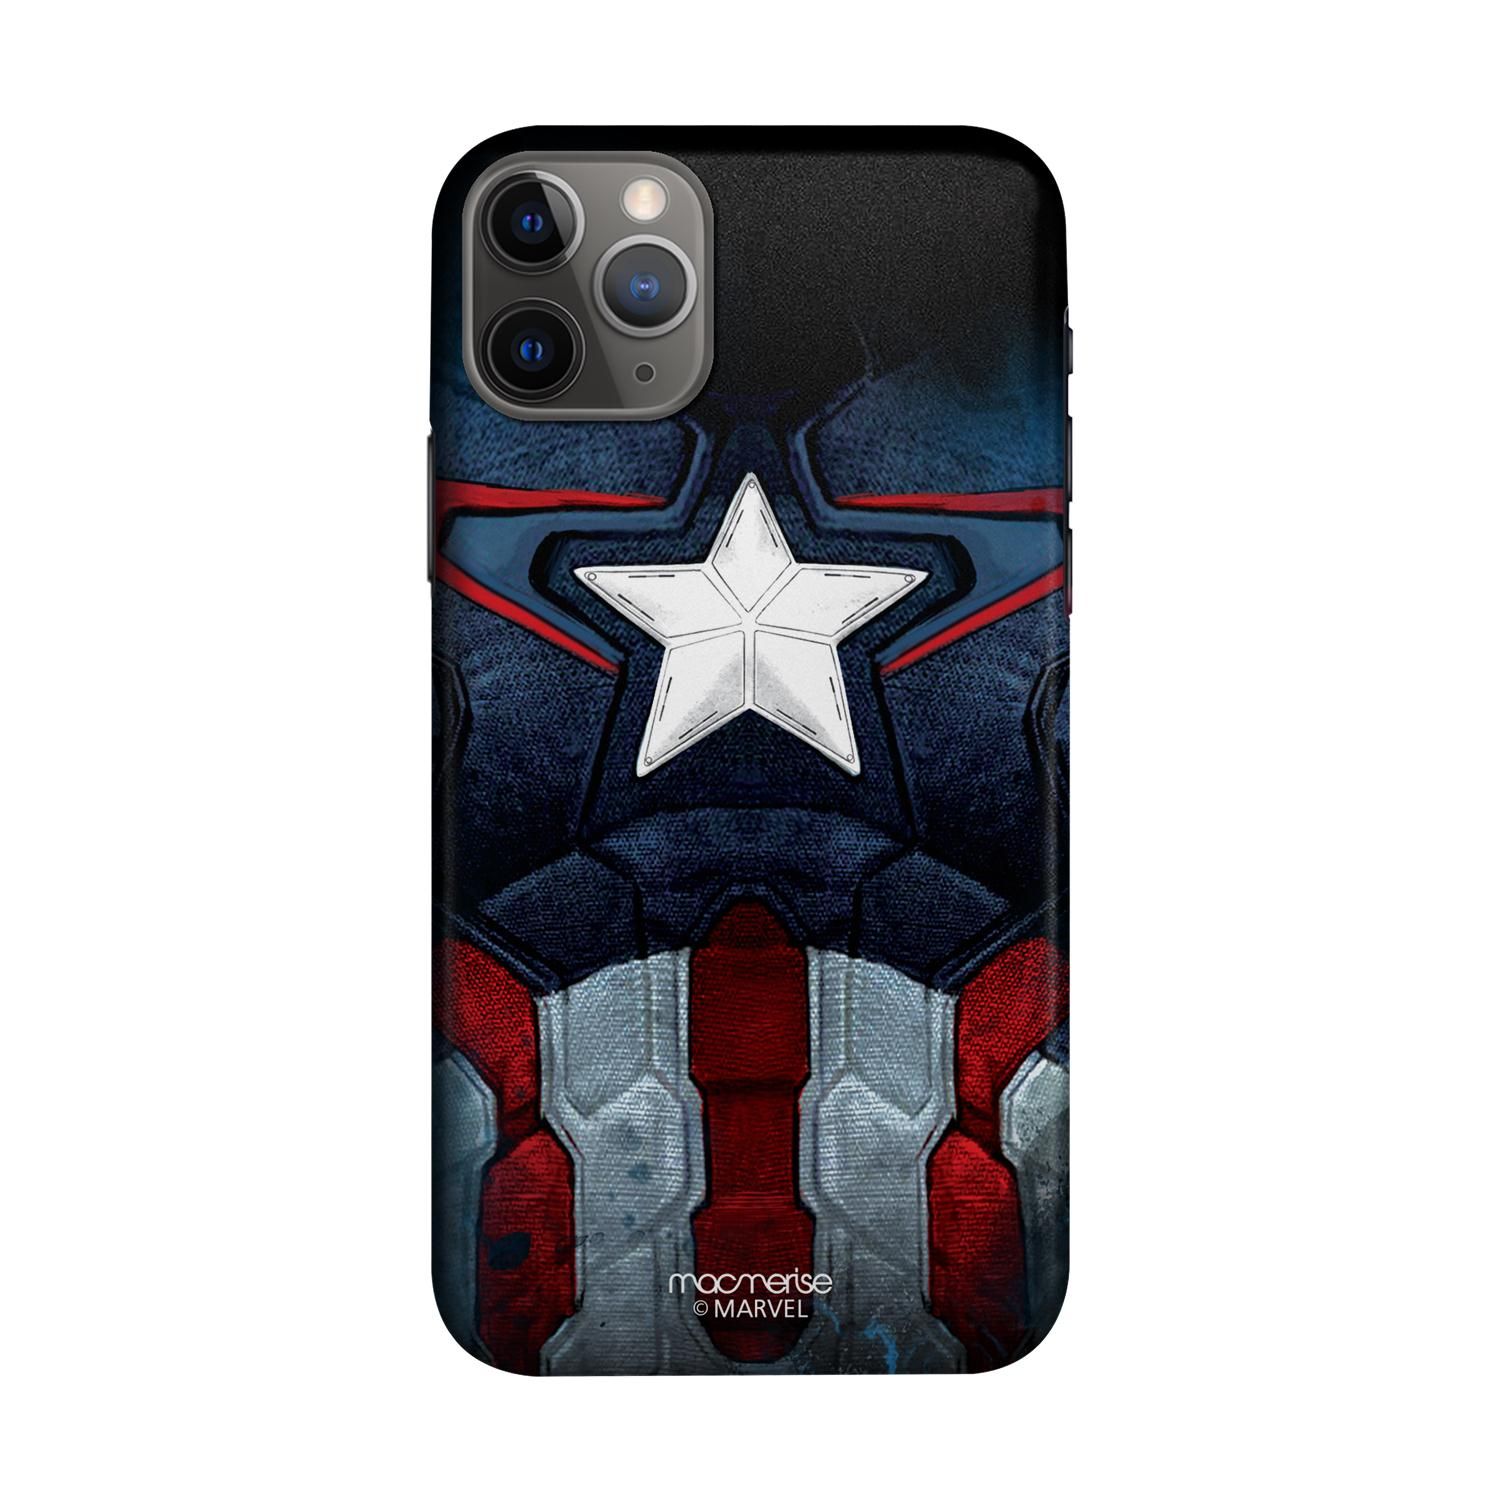 Cap Am Suit - Sleek Phone Case for iPhone 11 Pro Max